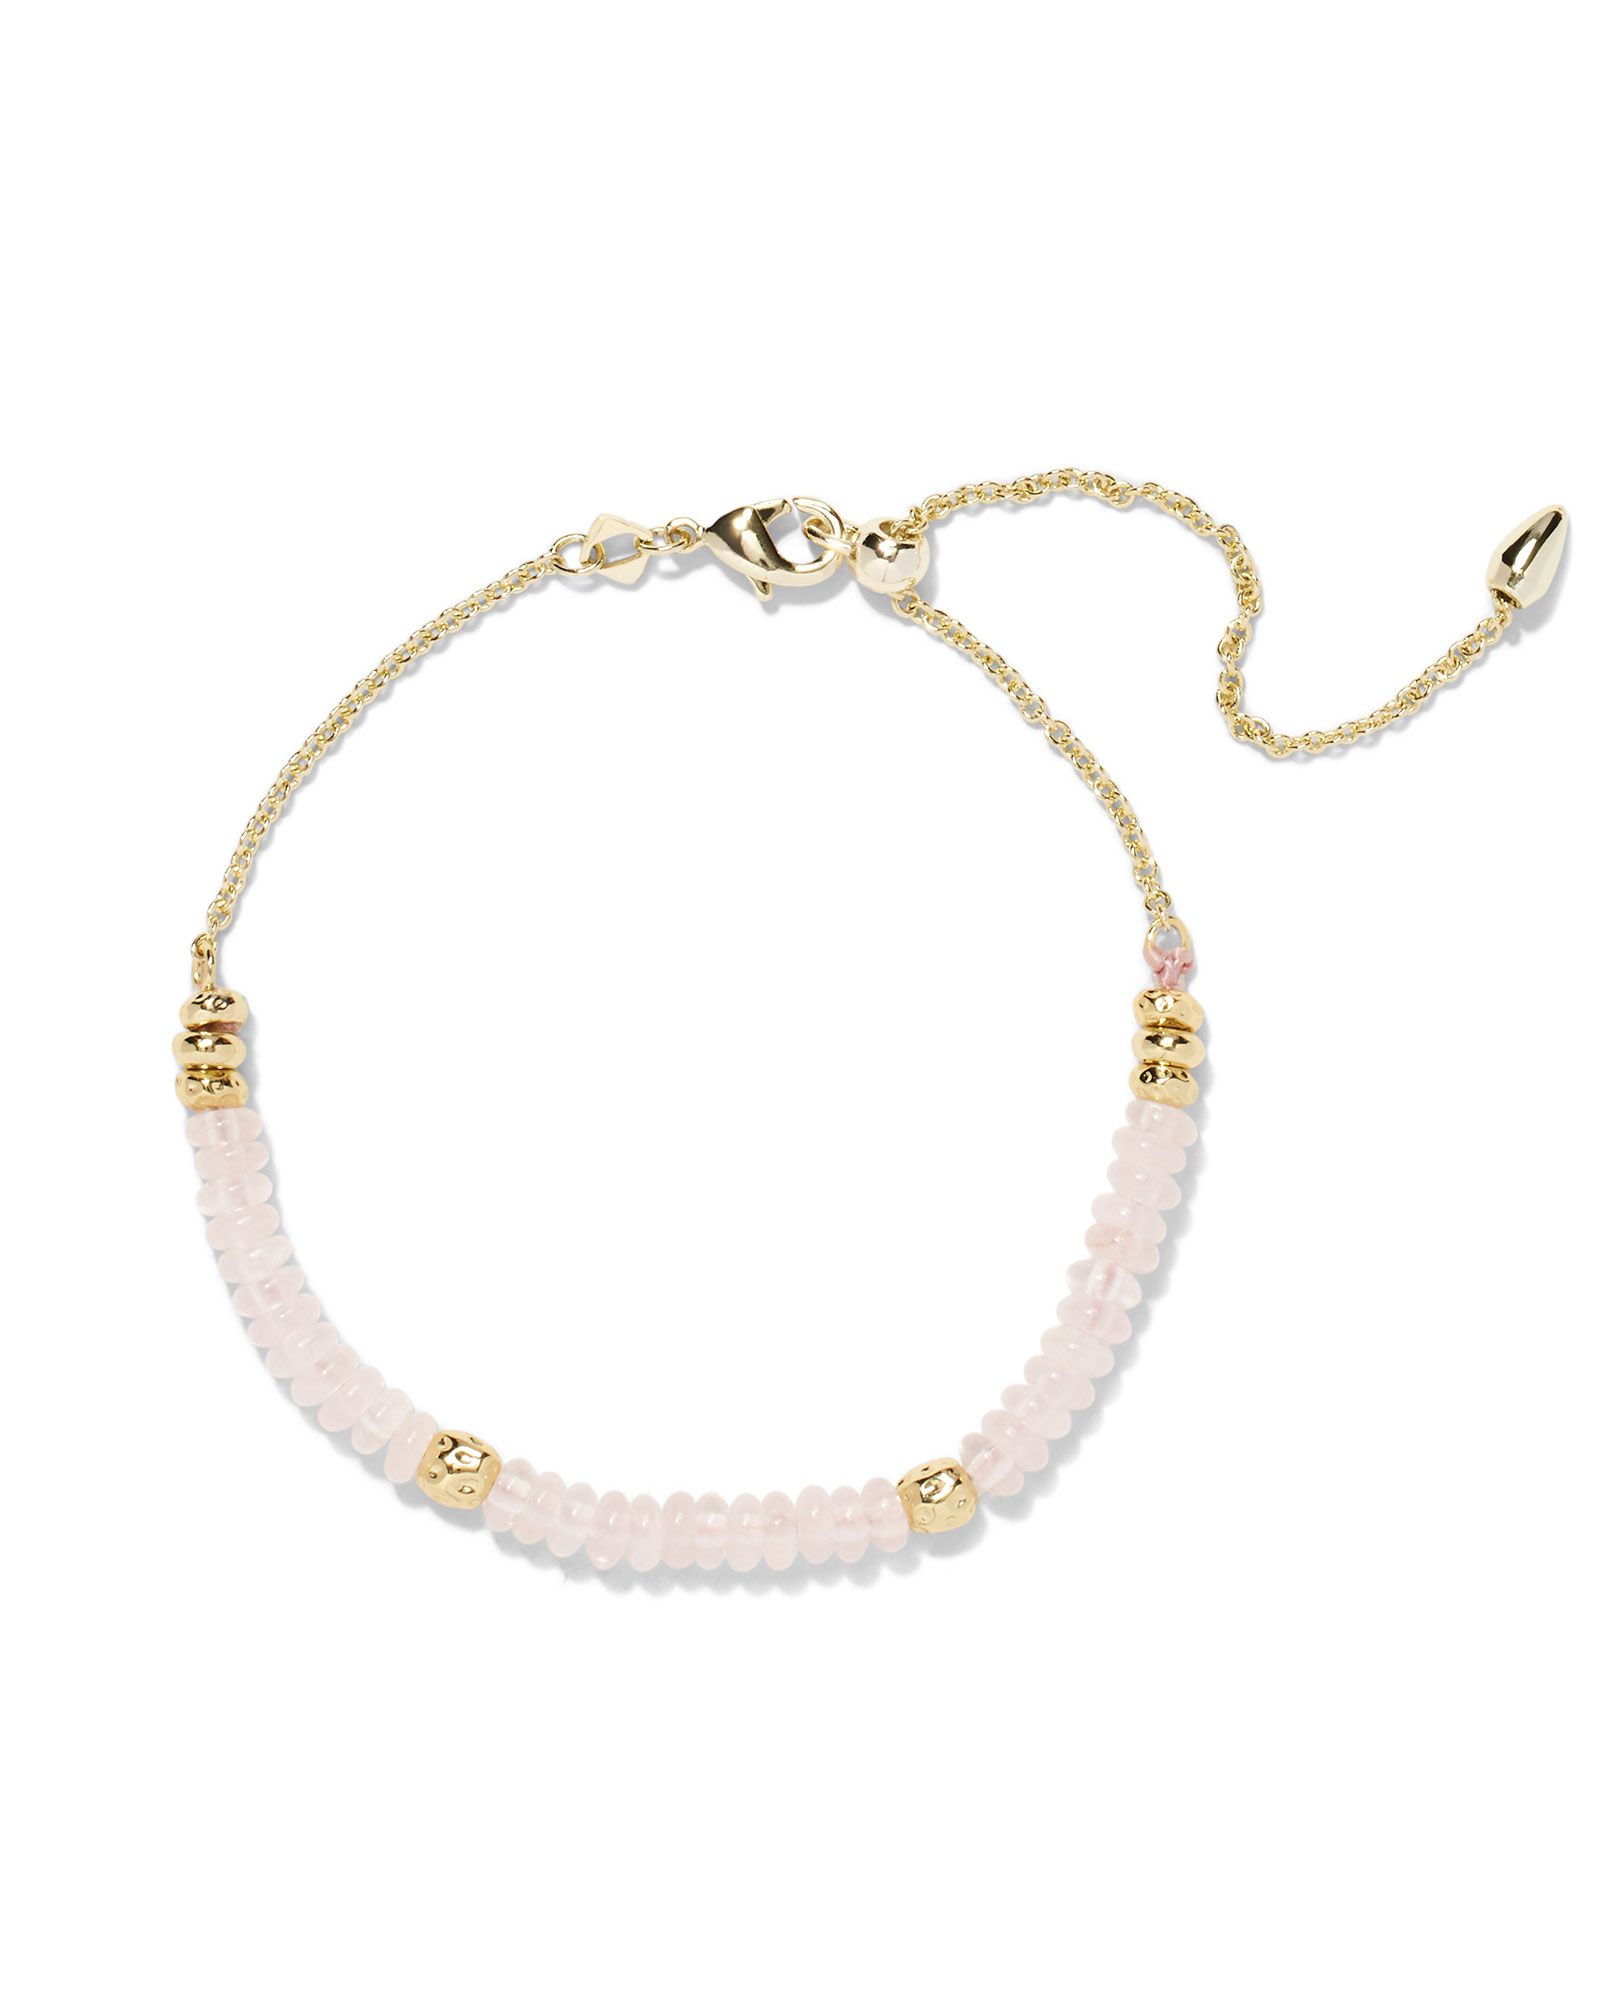 Deliah Gold Delicate Chain Bracelet in Rose Quartz | Kendra Scott